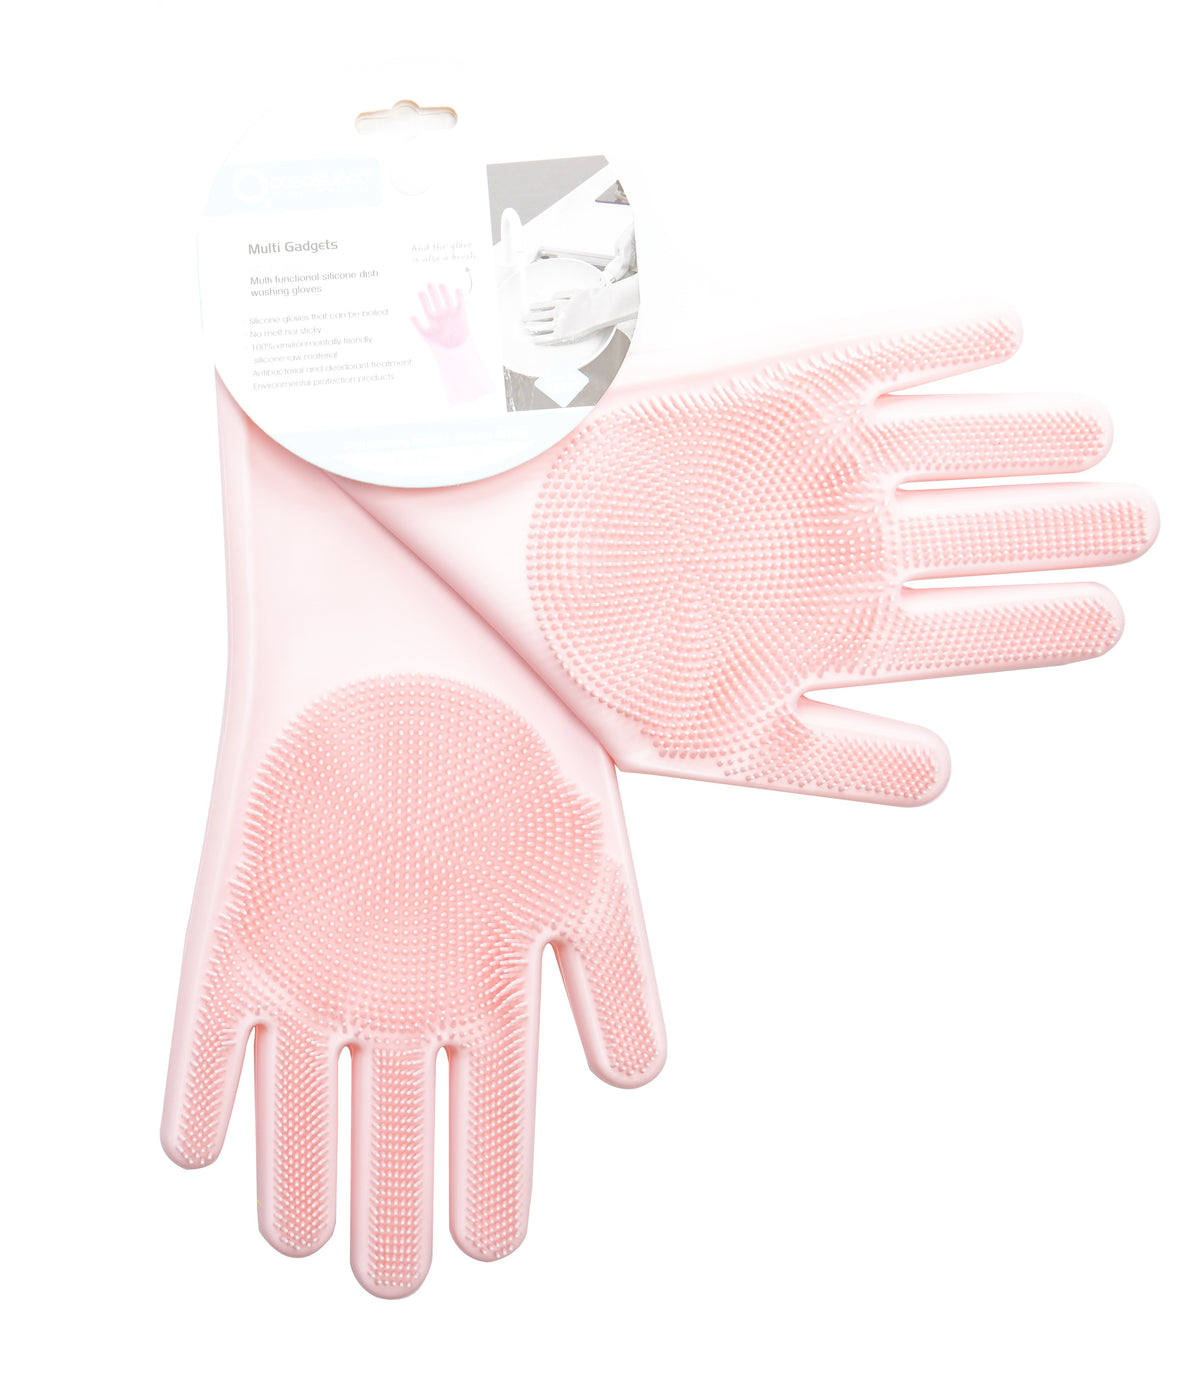 Multi-use Silicone Kitchen Gloves